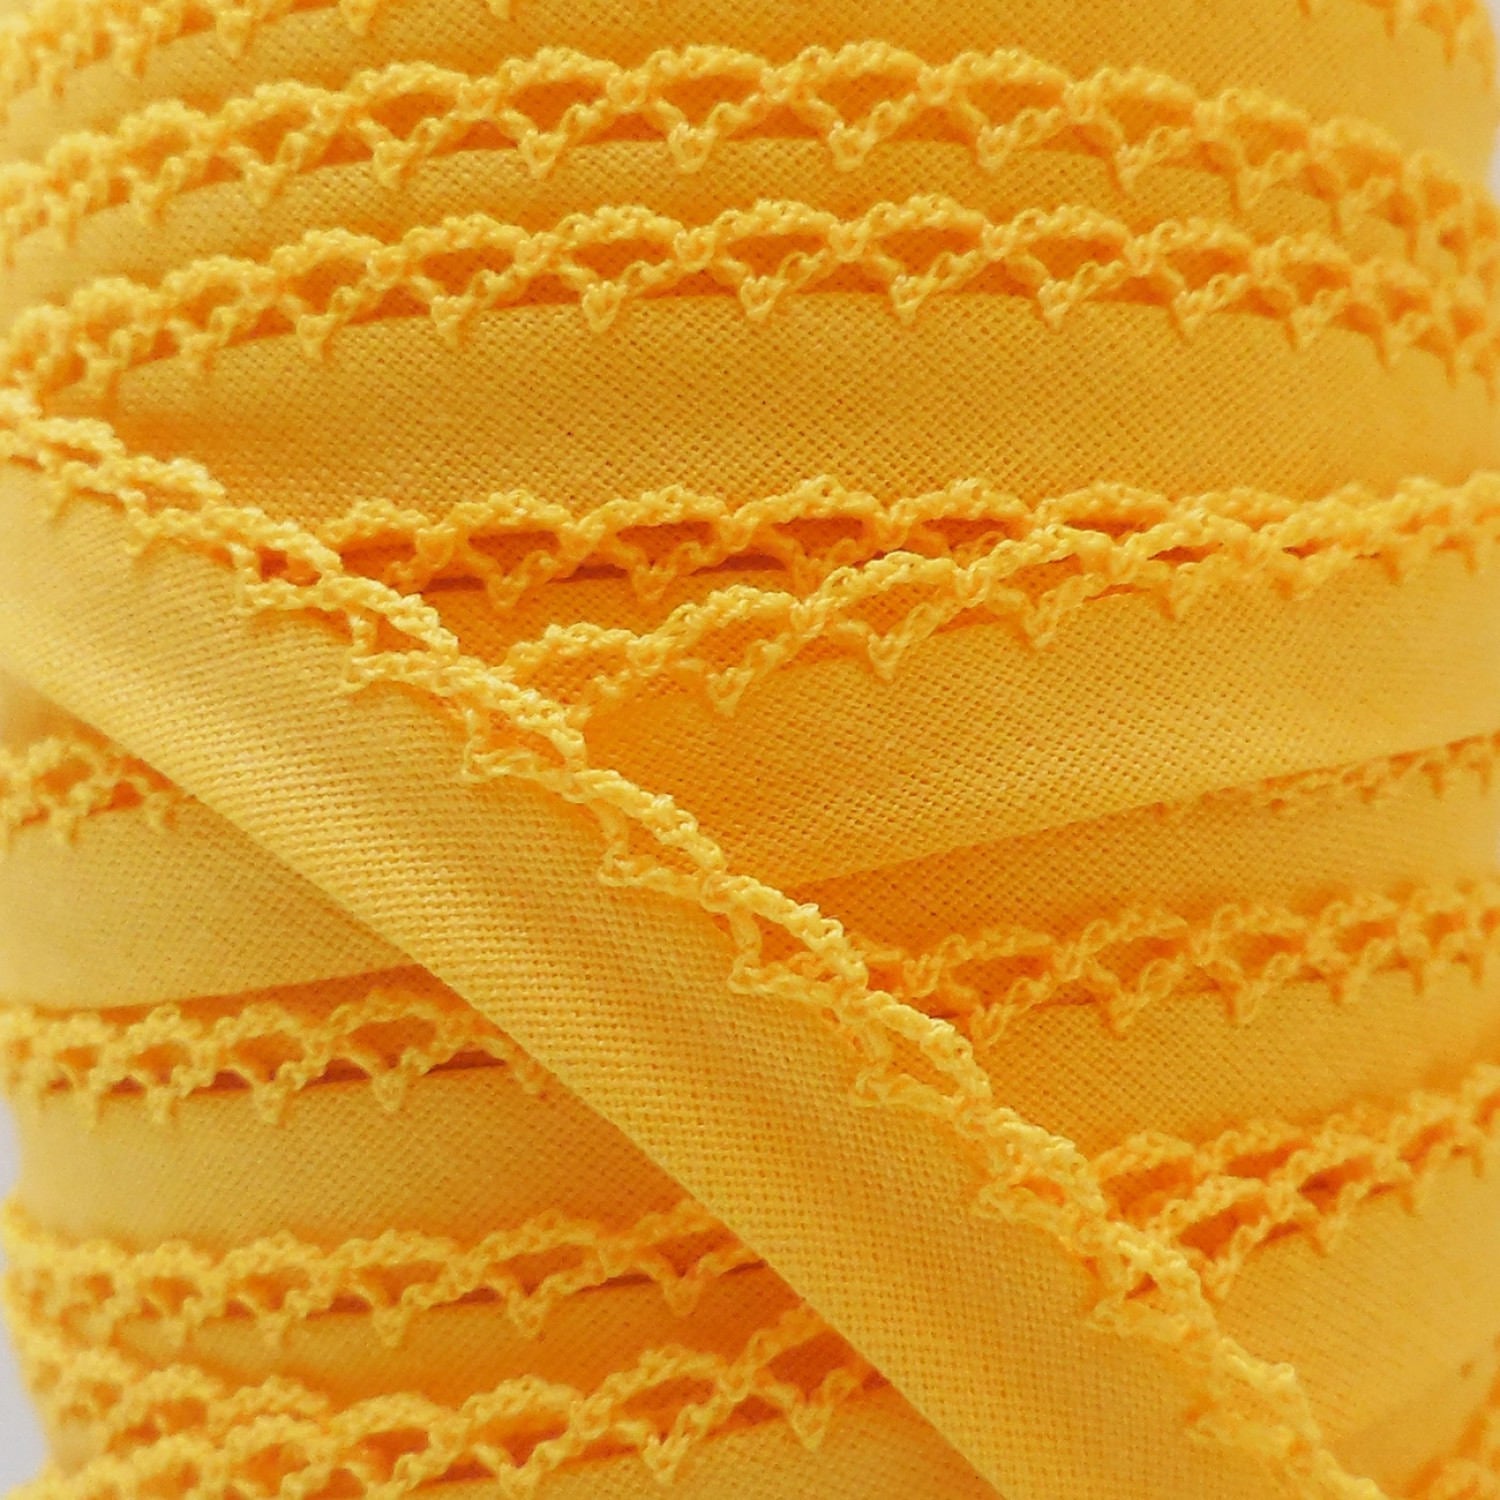 Yellow Crochet Bias Tape, Double Fold Bias Tape, Crochet Edge Bias Tape, Quilt Binding, Lace Bias Tape, BUMBLE BEE YELLOW Picot Bias Tape